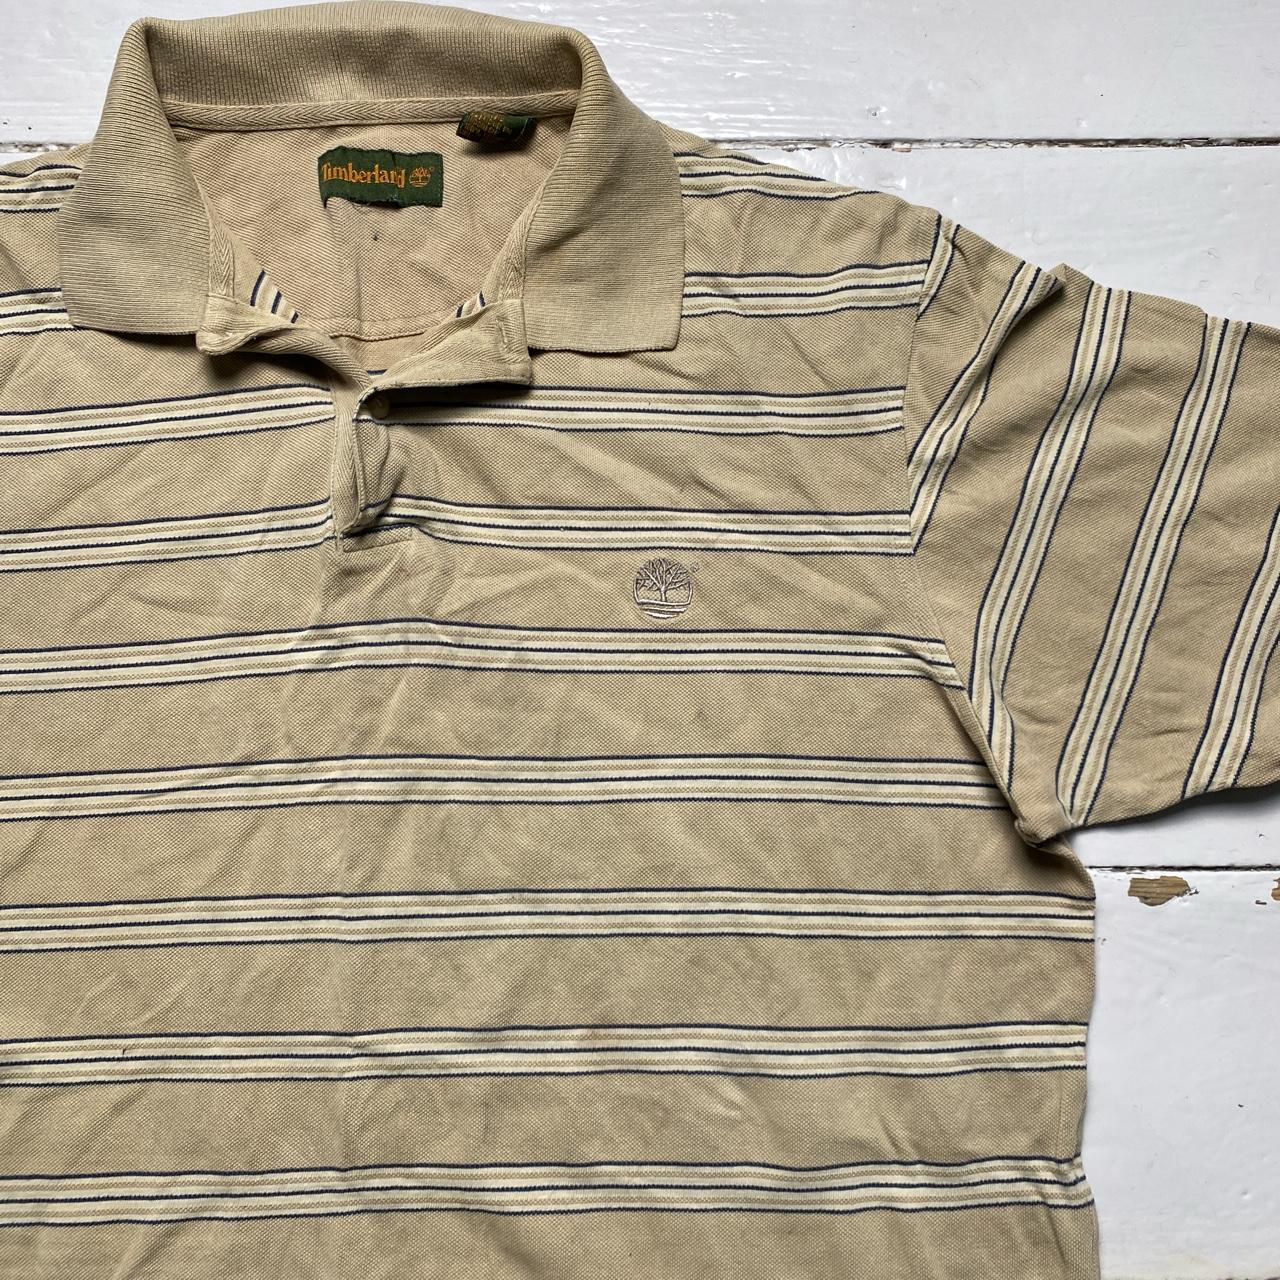 Timberland Cream Striped Short Sleeve Polo Shirt